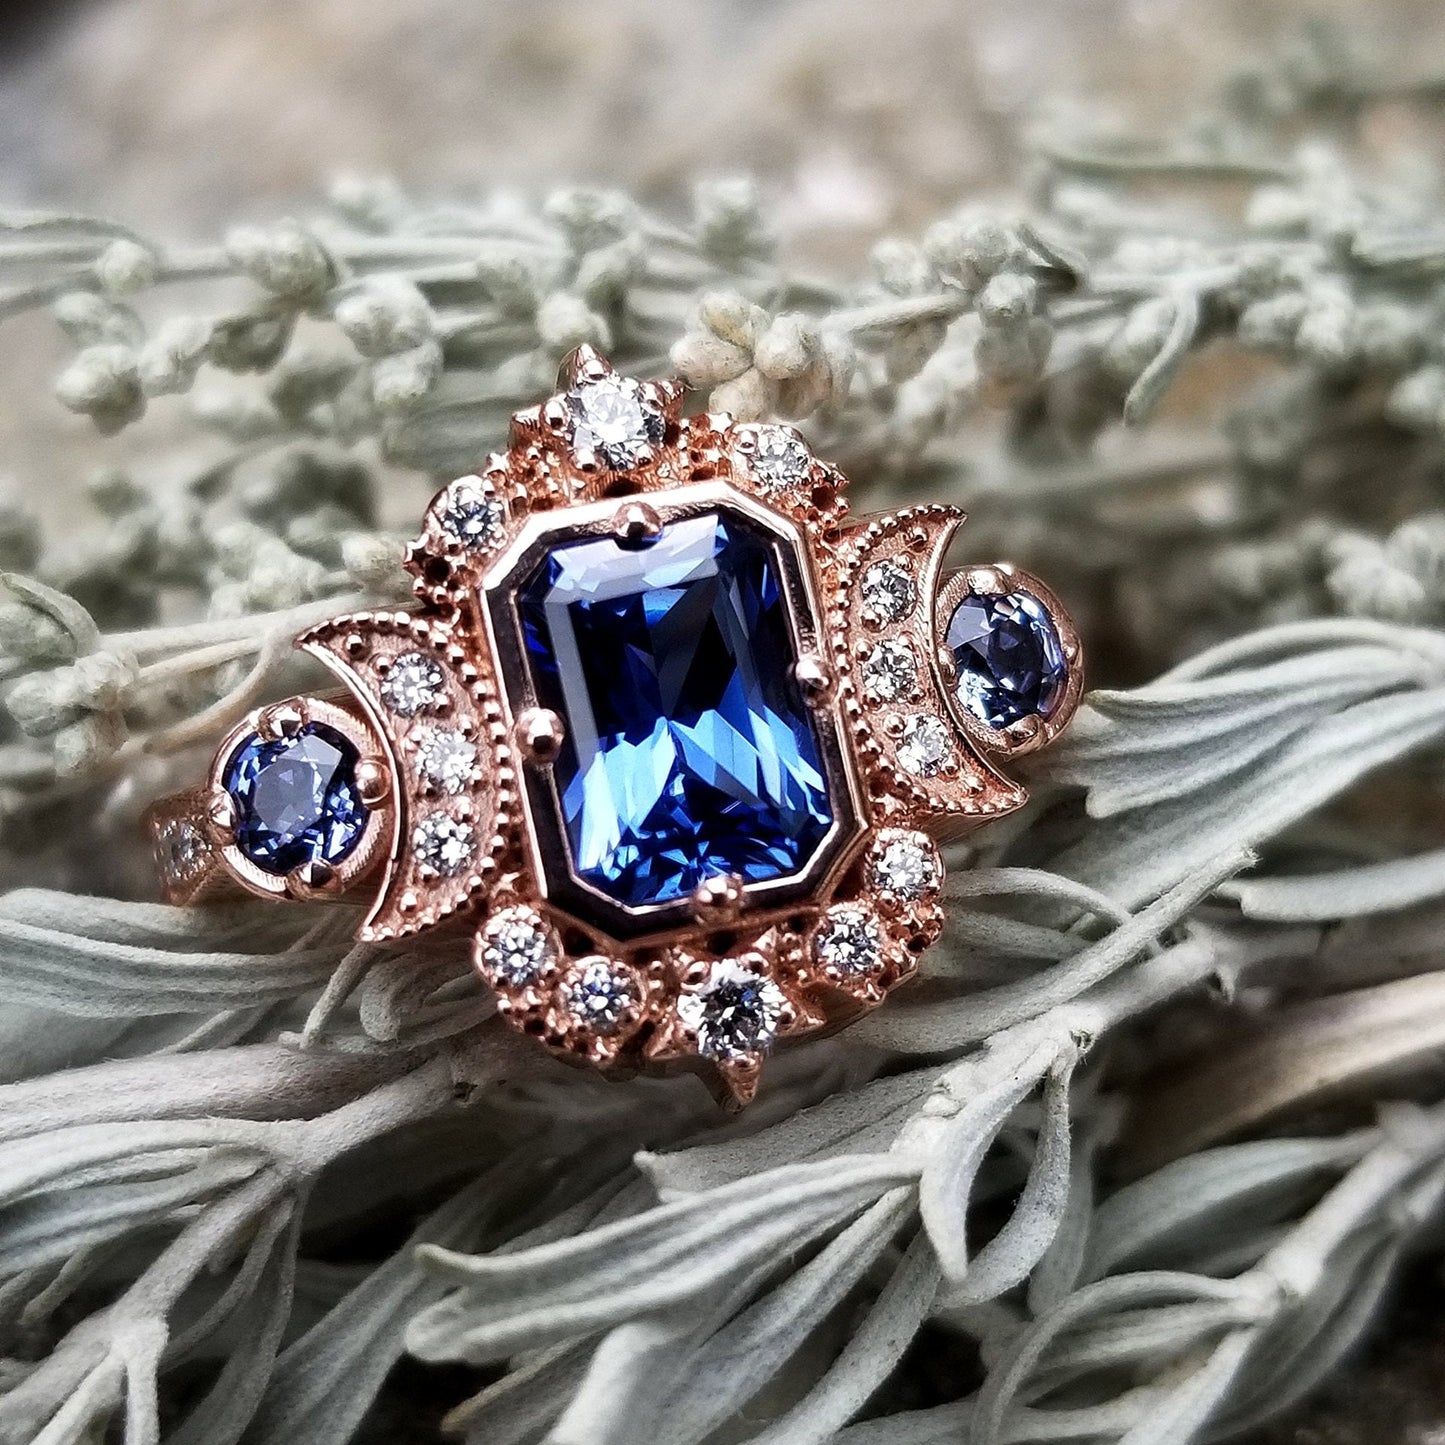 Radiant Blue Sapphire Selene Crescent Moon Engagement Ring - Diamonds and Blue Chatham Sapphires - 14k Palladium White Gold